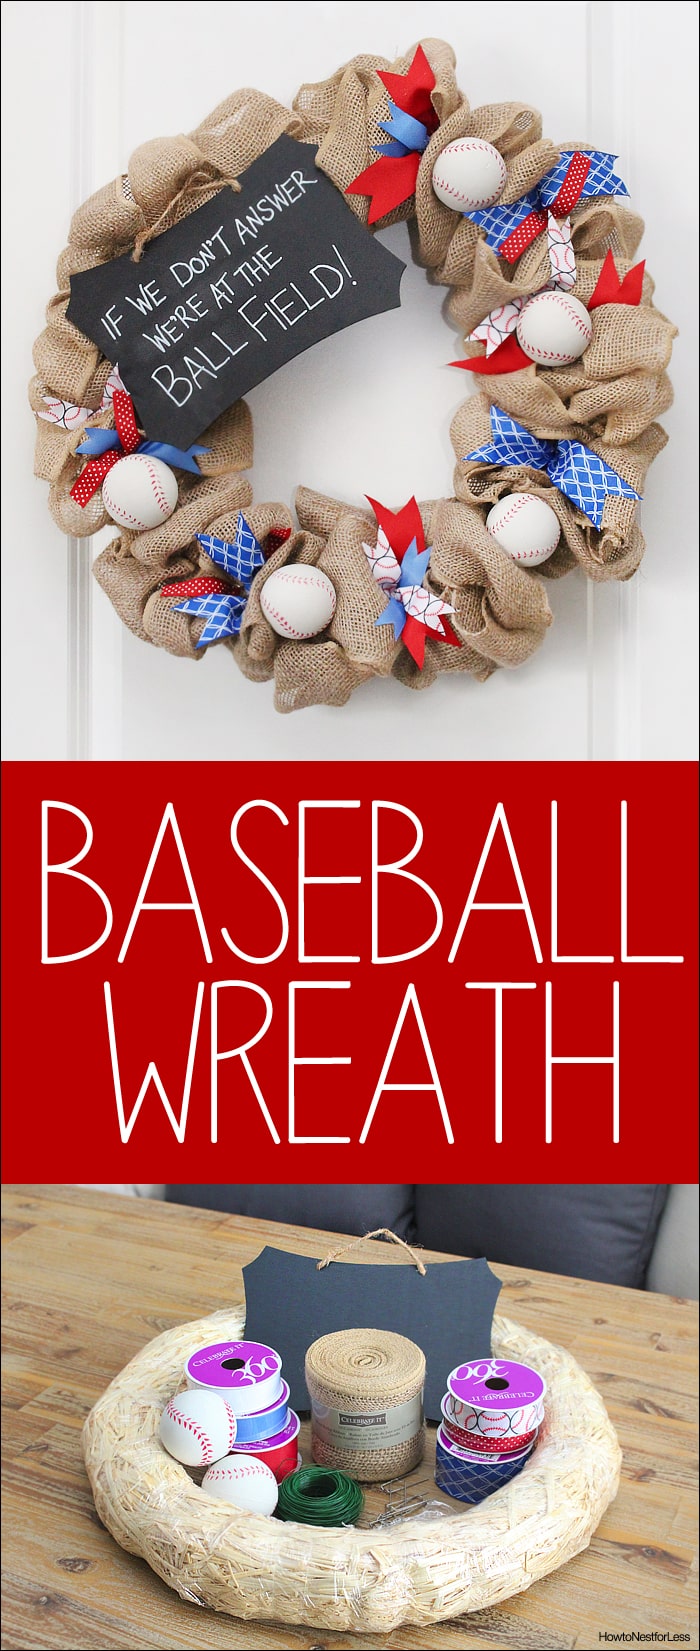 easy diy baseball wreath